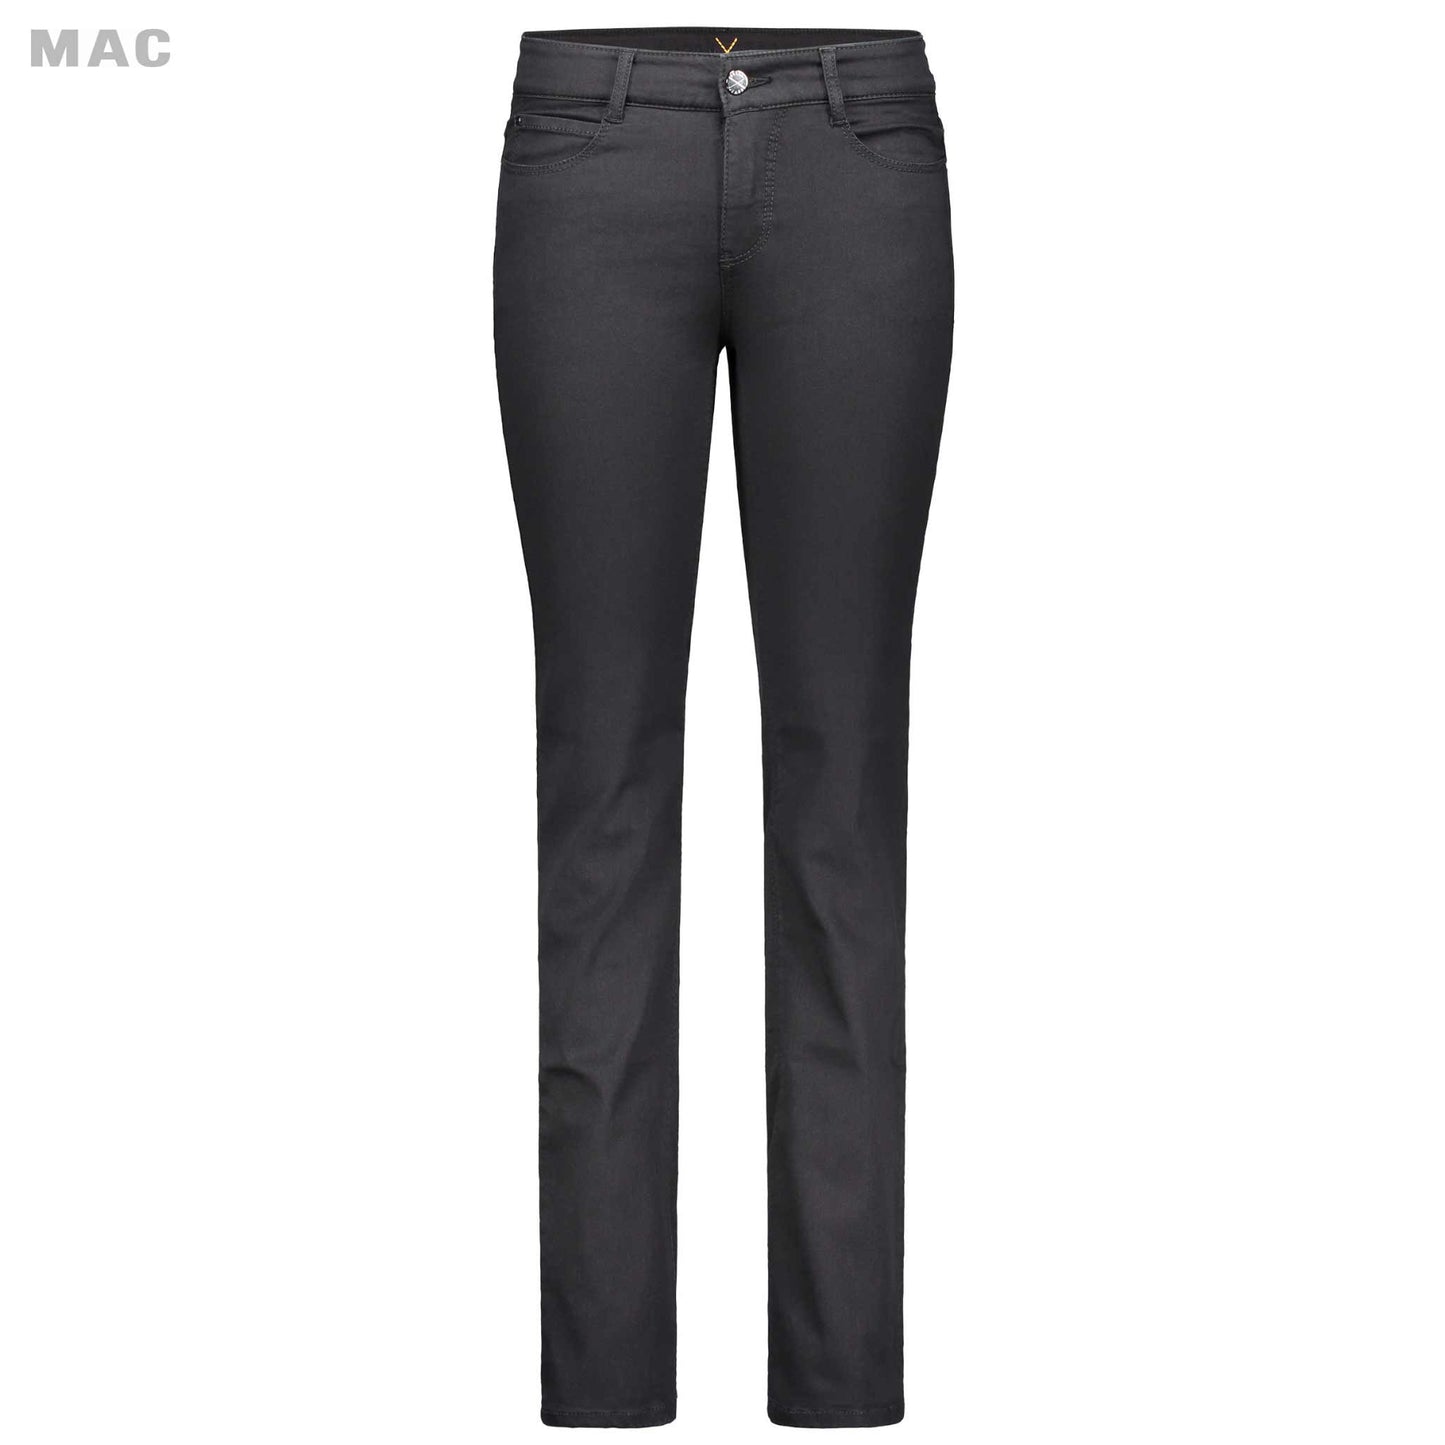 kleding lange vrouwen mac jeans dream zwart